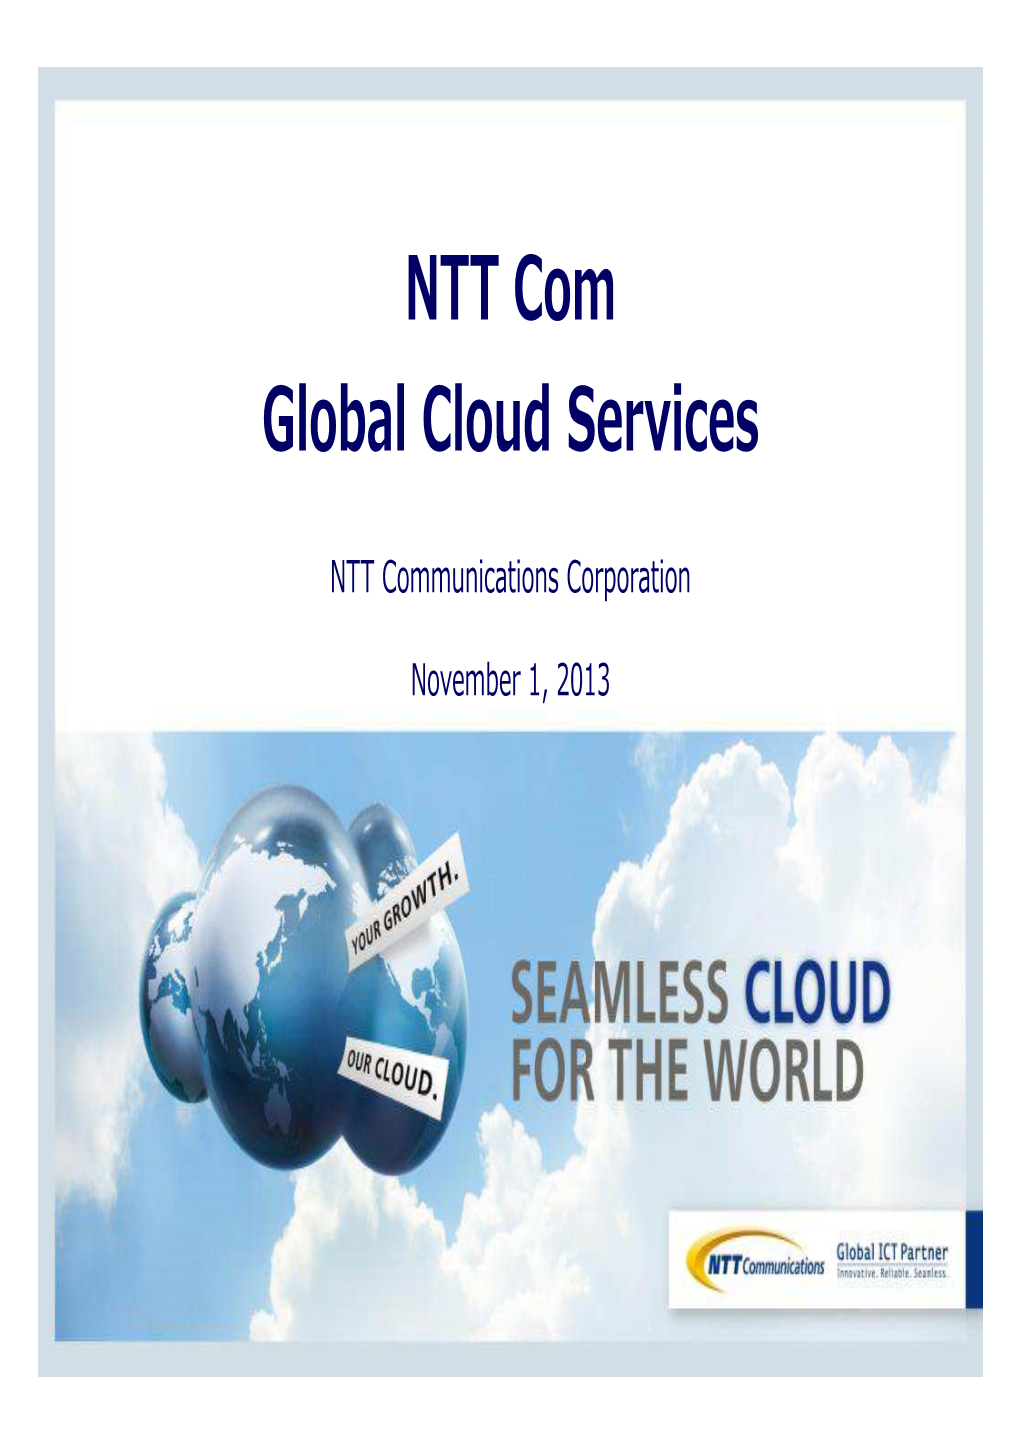 NTT Com Global Cloud Services